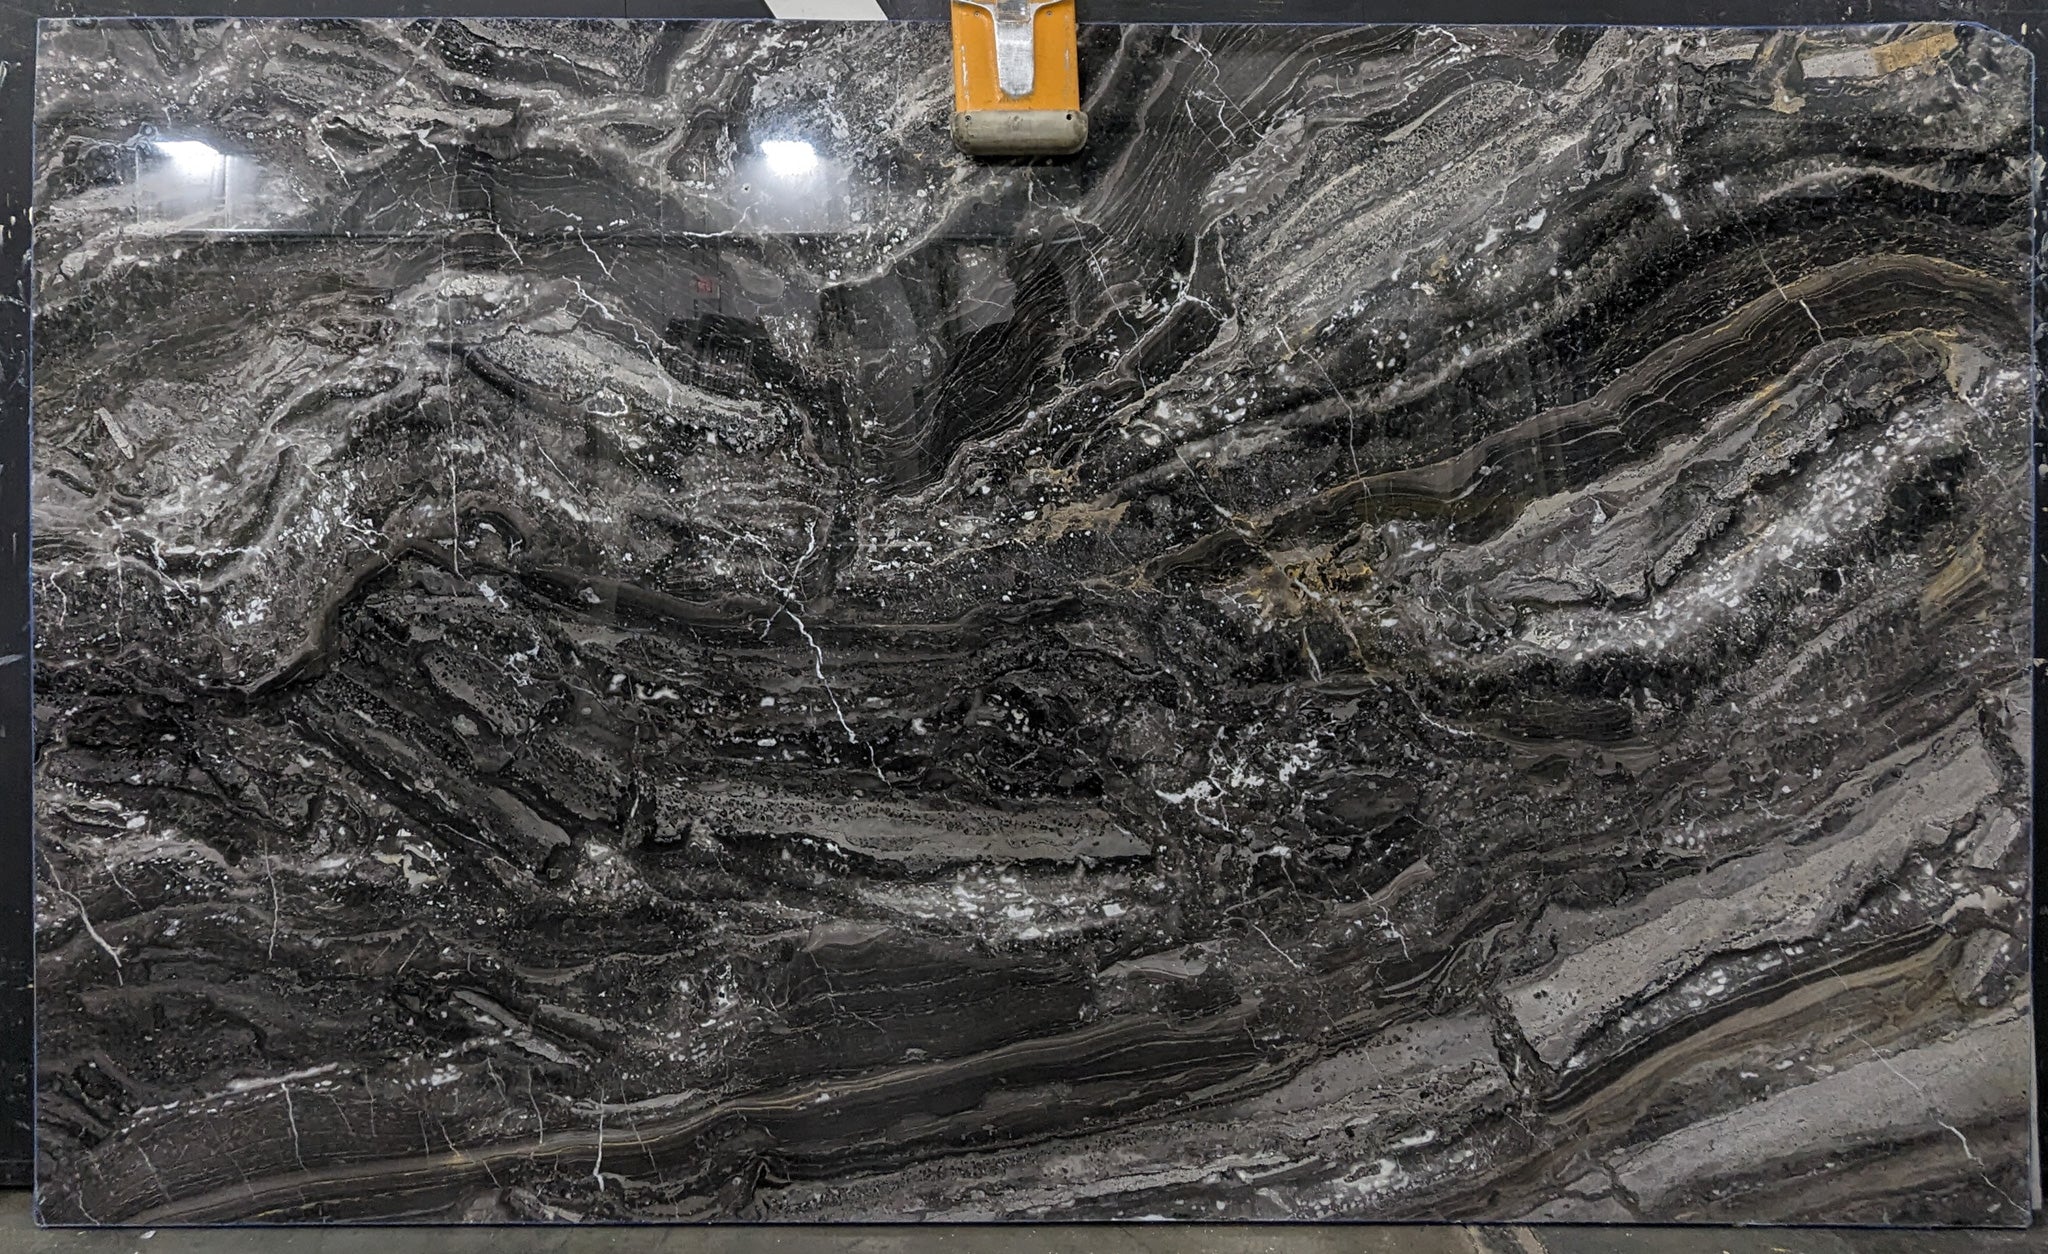  Arabescato Orobico Dark Marble Slab 3/4 - HYEQ#34 -  73x124 